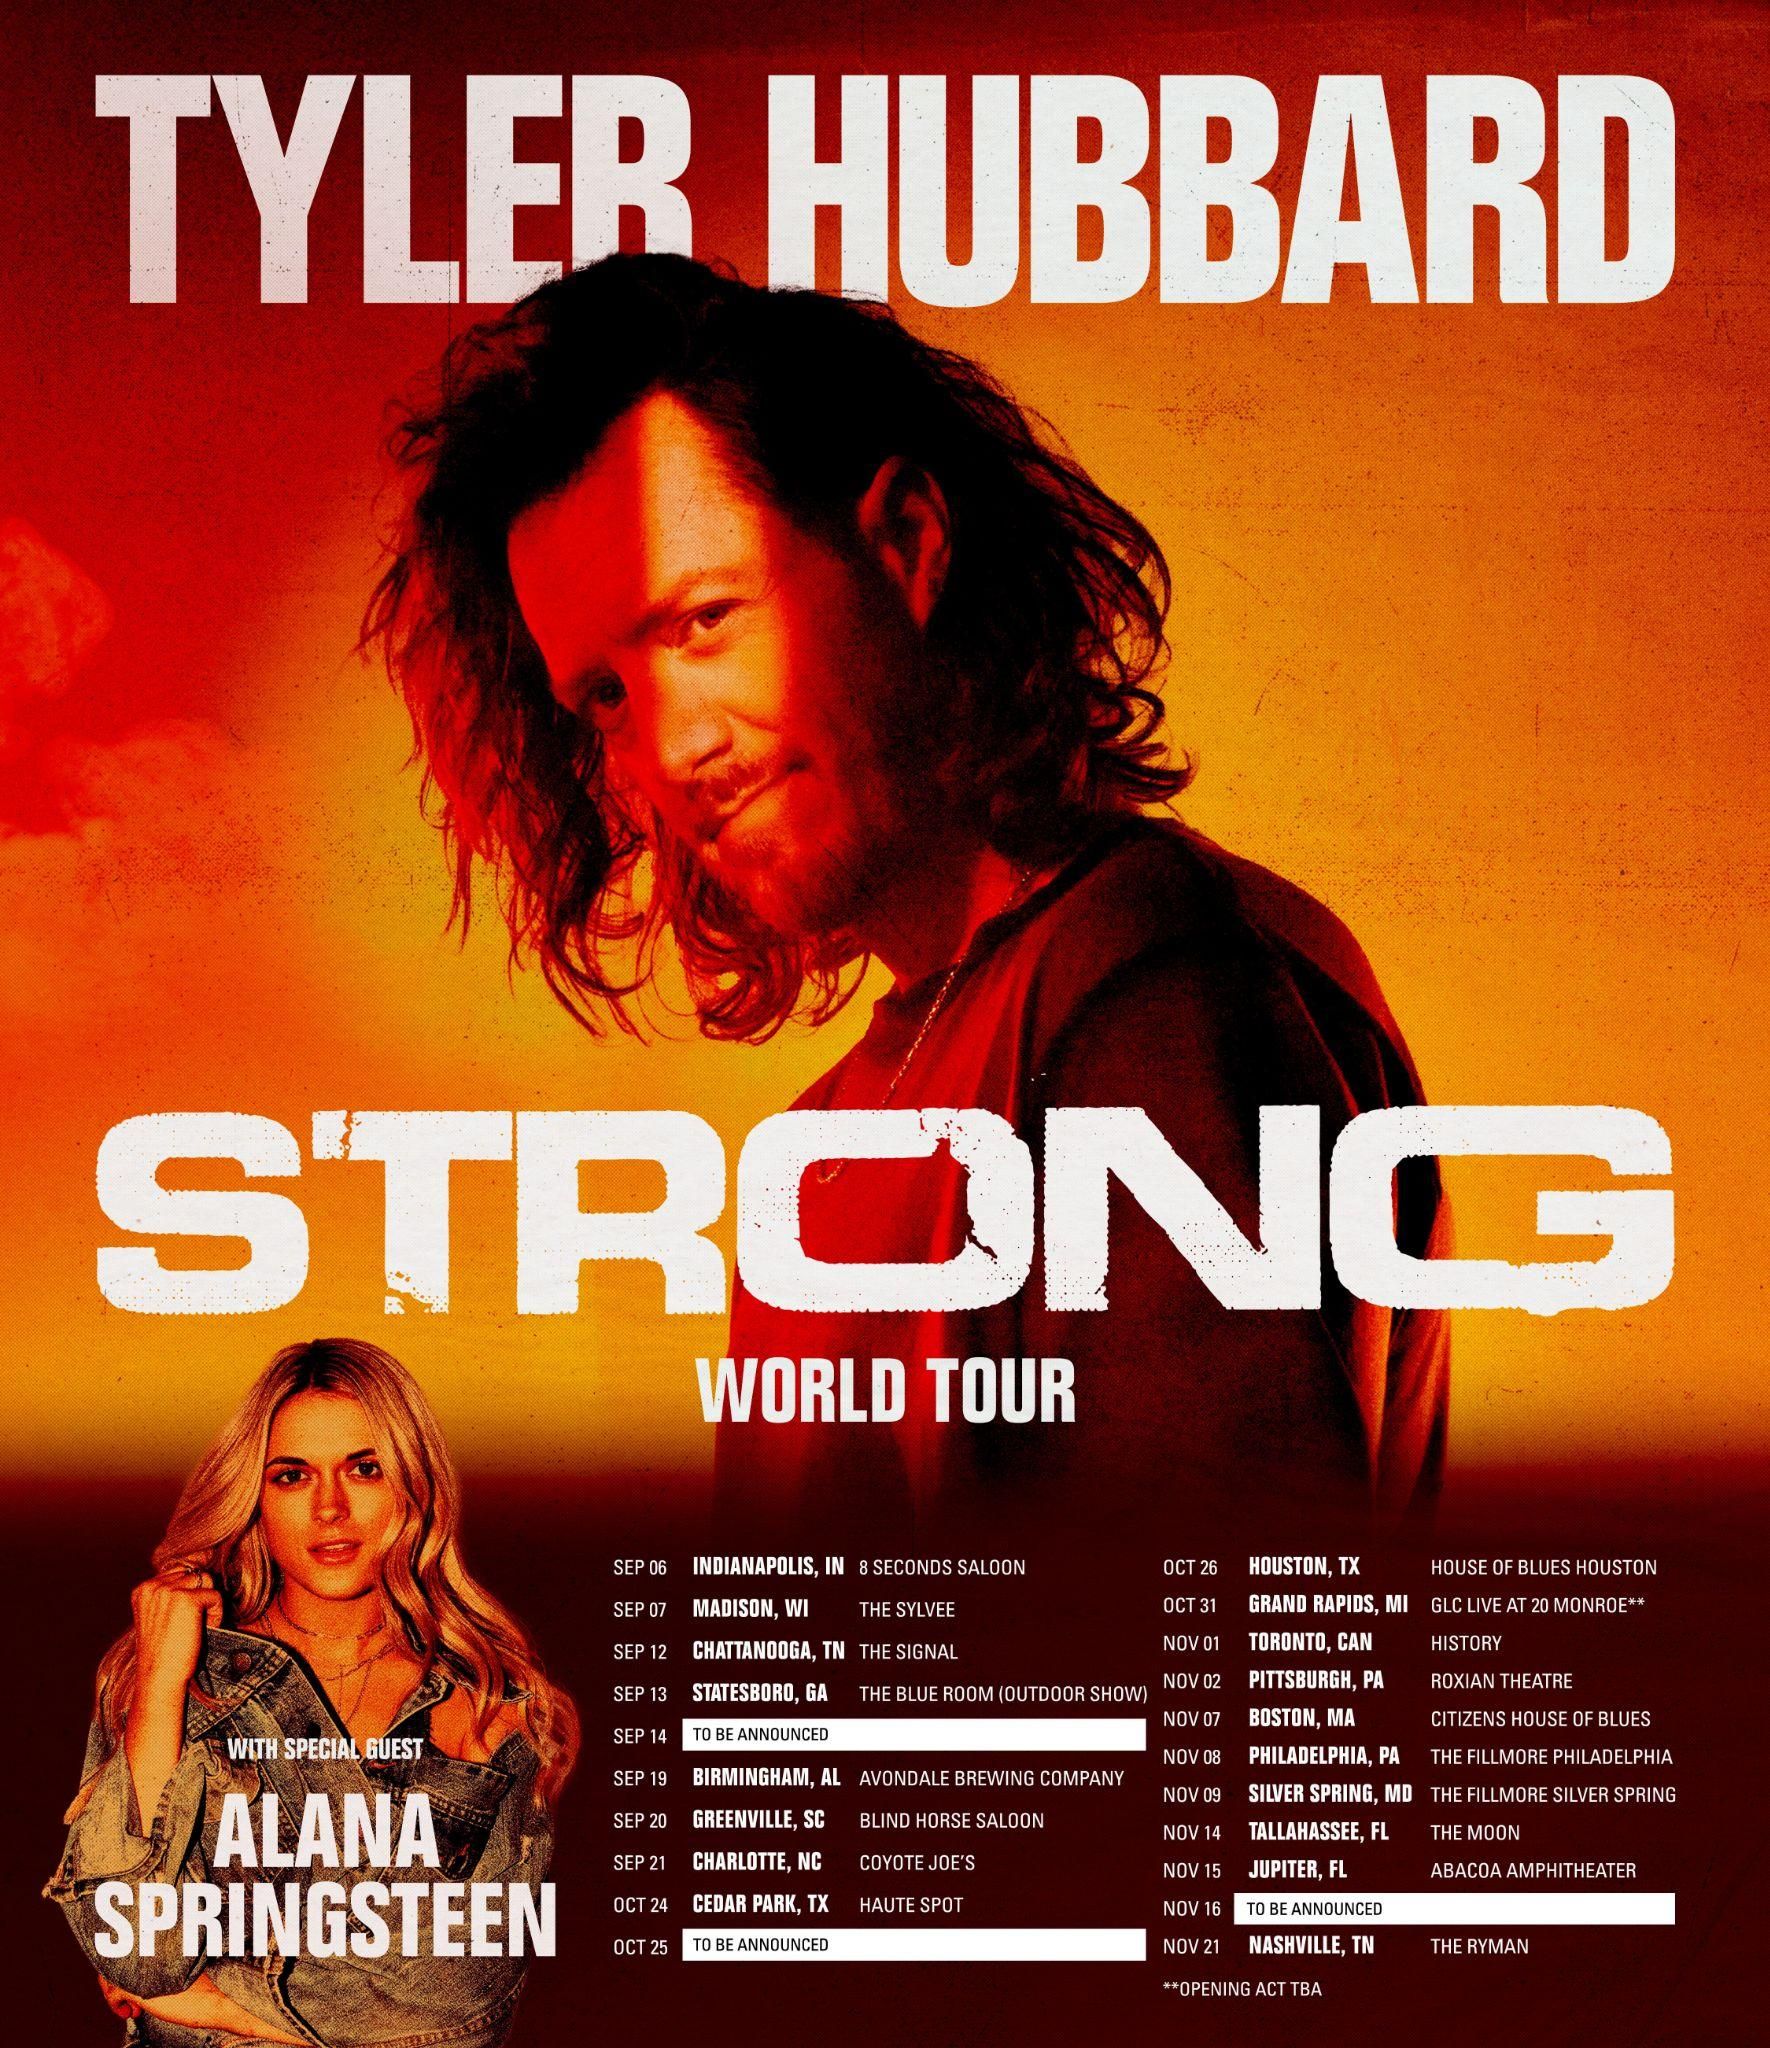 Tyler Hubbard Announces Strong World Tour